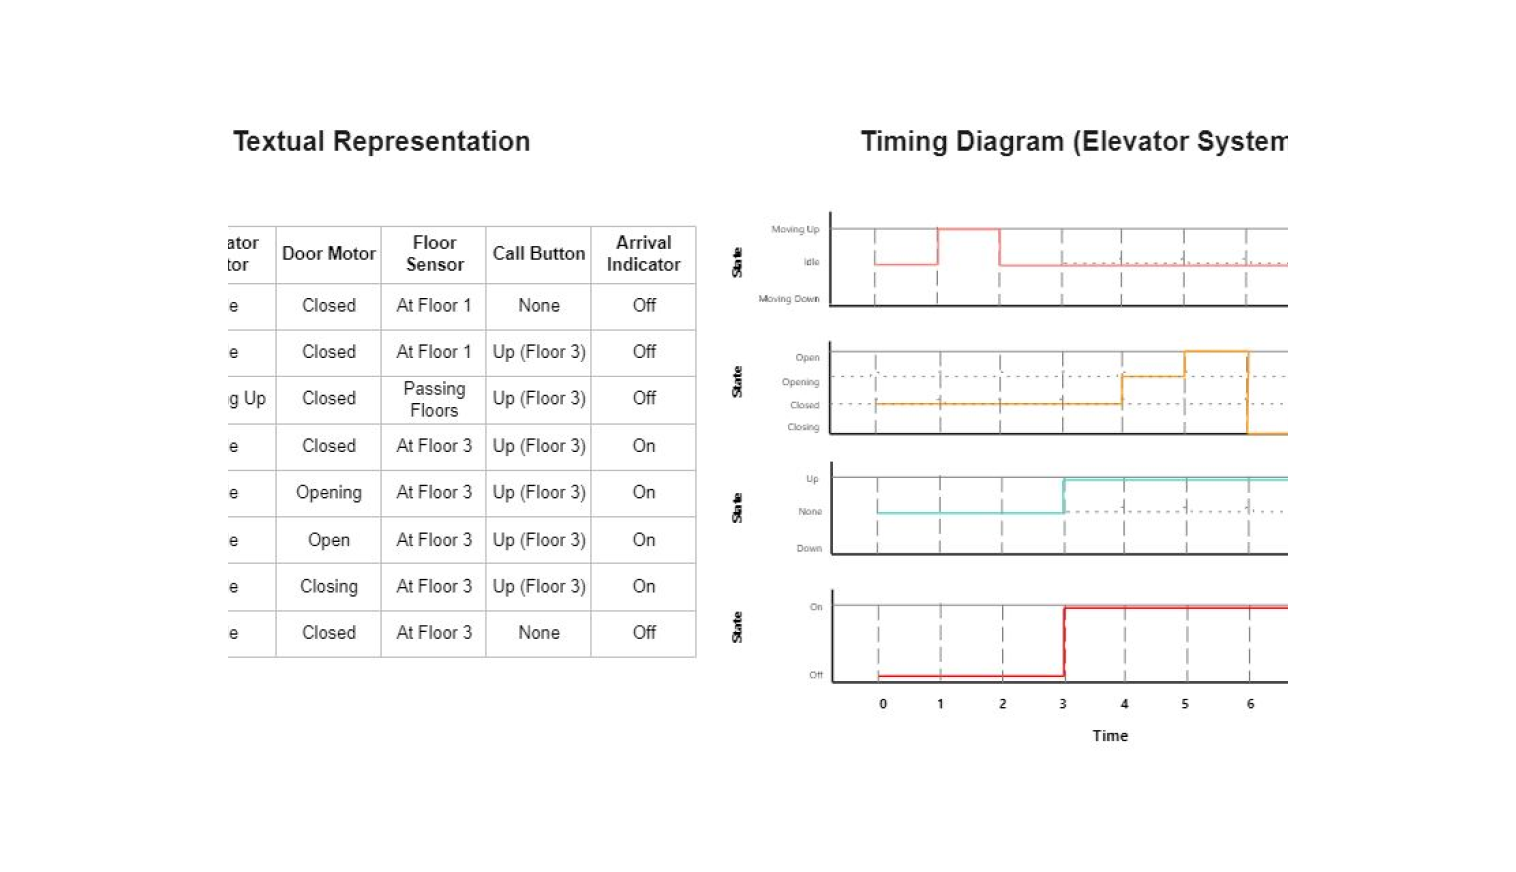 Timing Diagram for elevator system